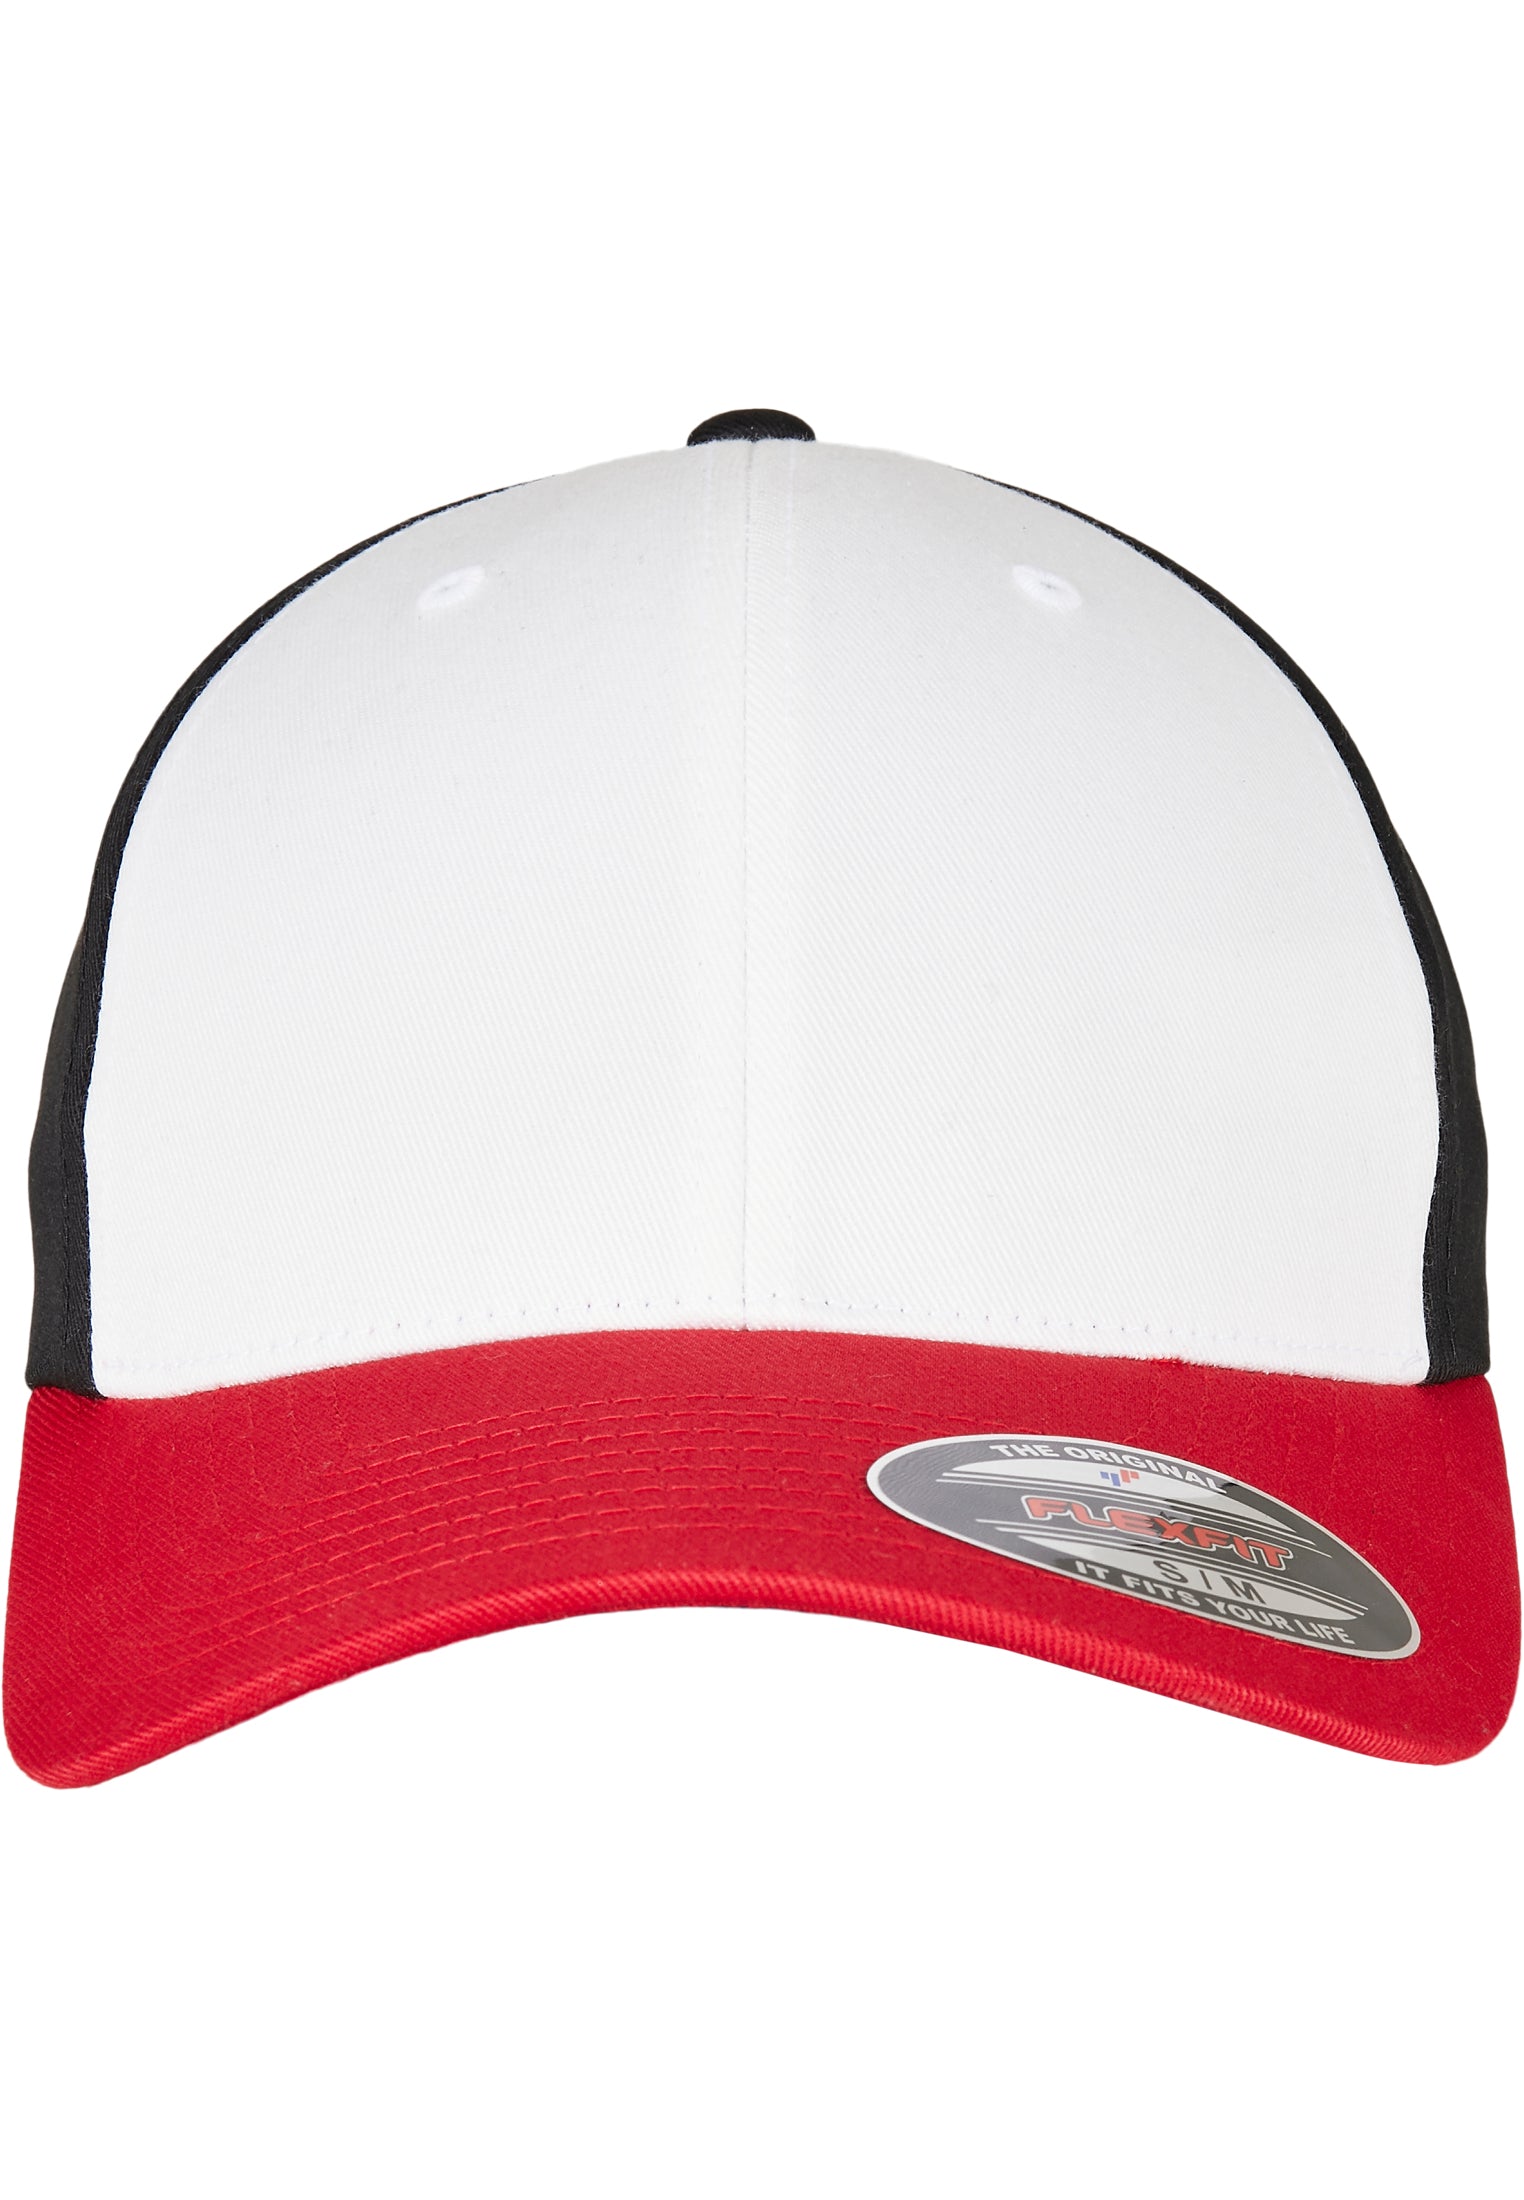 Flexfit CAP Red/White/Black Caps 3 TONE COMBED 6277TT WOOLY